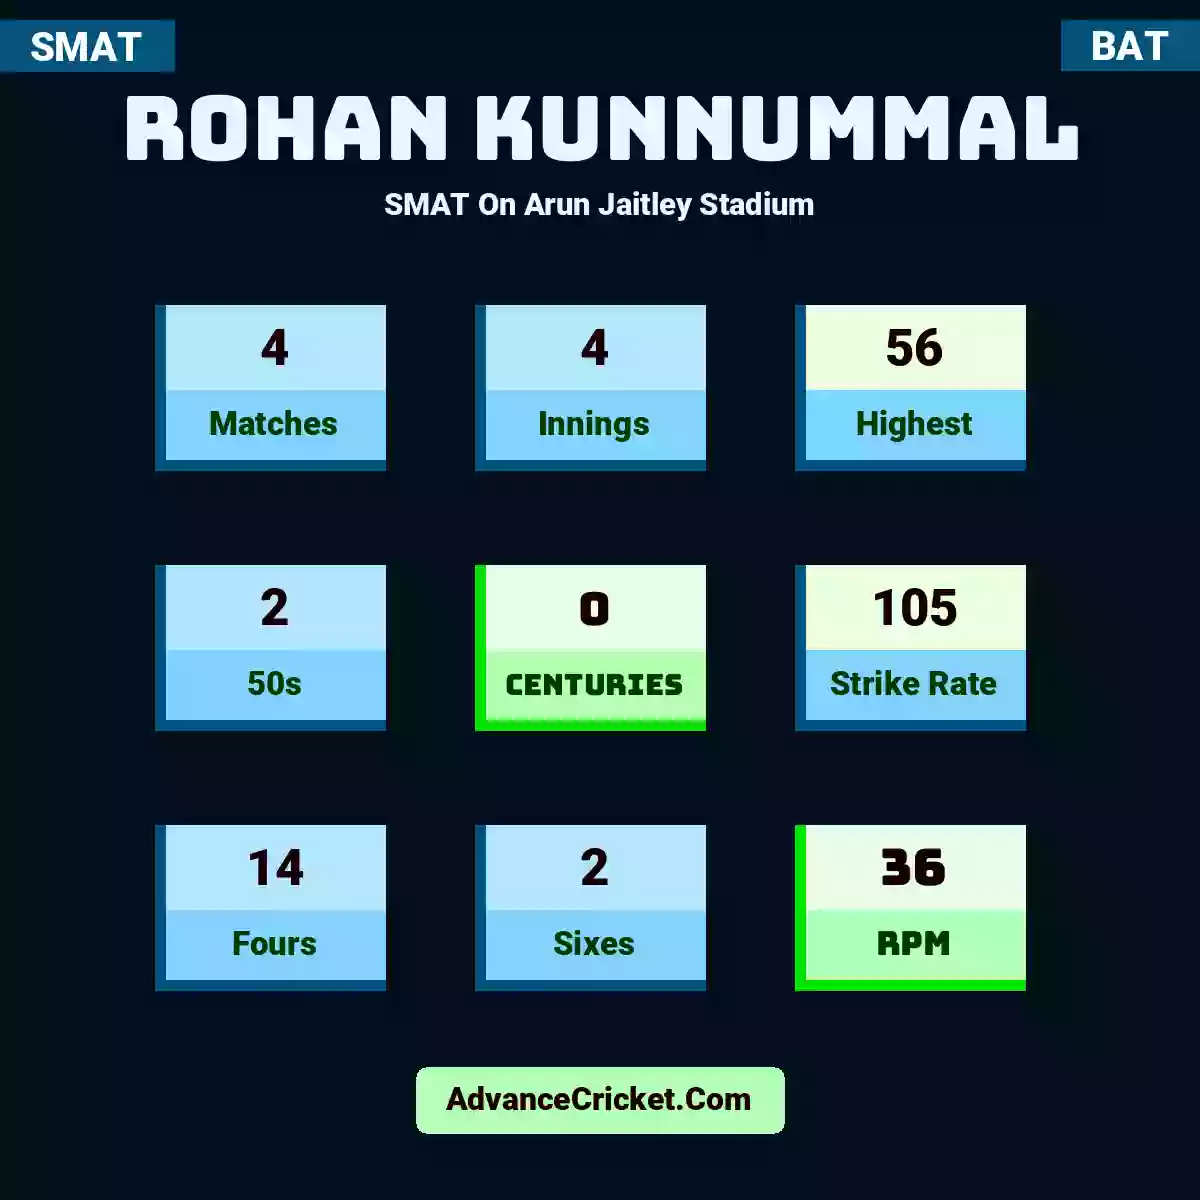 Rohan Kunnummal SMAT  On Arun Jaitley Stadium, Rohan Kunnummal played 4 matches, scored 56 runs as highest, 2 half-centuries, and 0 centuries, with a strike rate of 105. R.Kunnummal hit 14 fours and 2 sixes, with an RPM of 36.